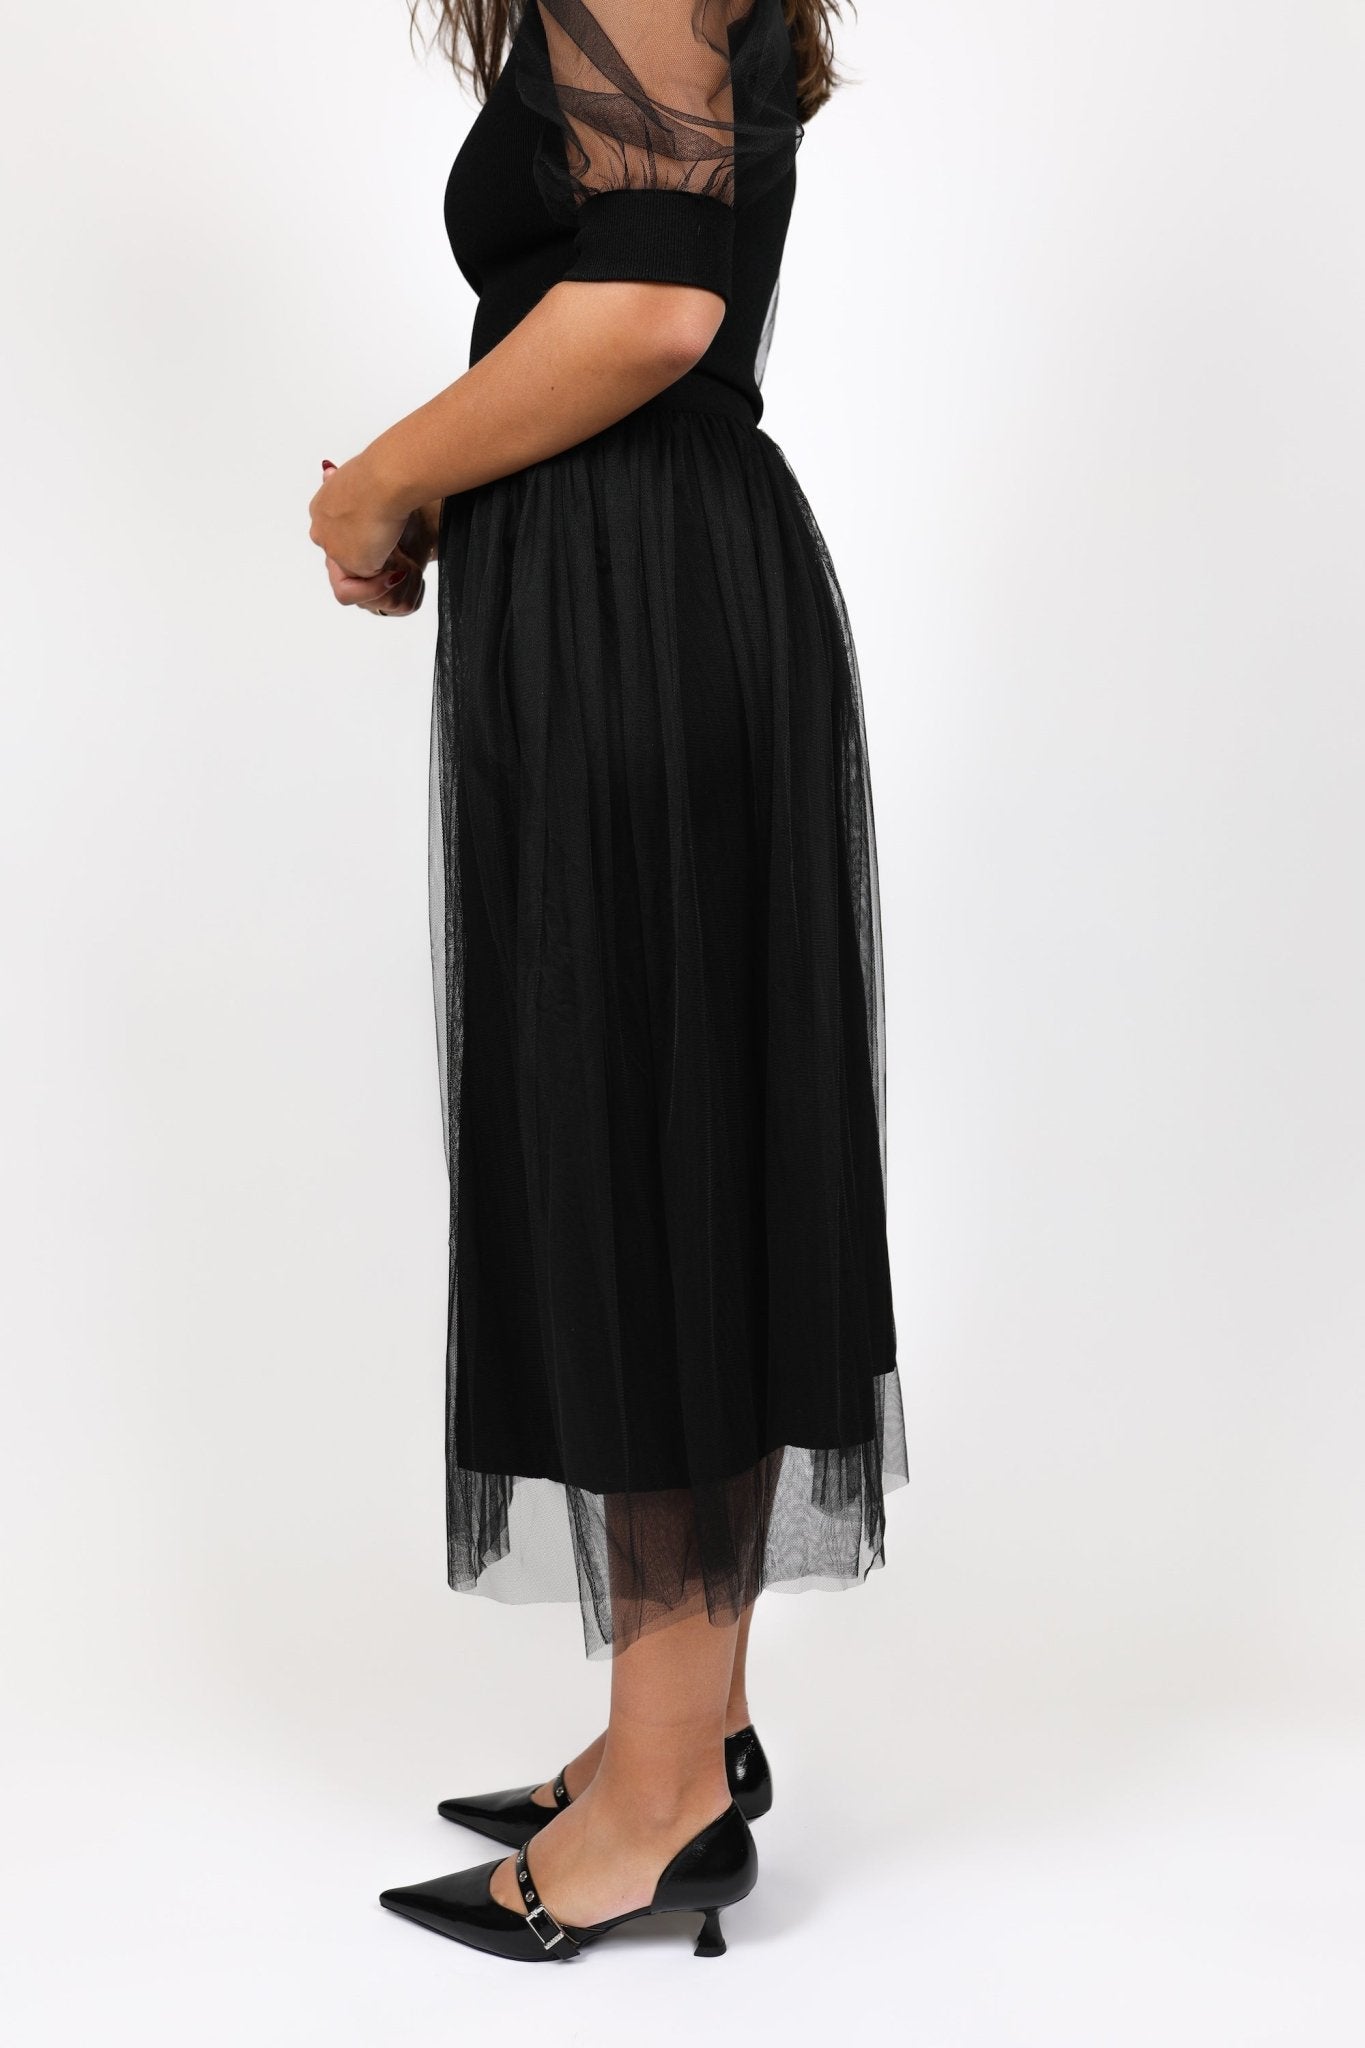 Gathered Tulle Skirt - Autumn Cashmere - Danali - PCE13665-Black-S